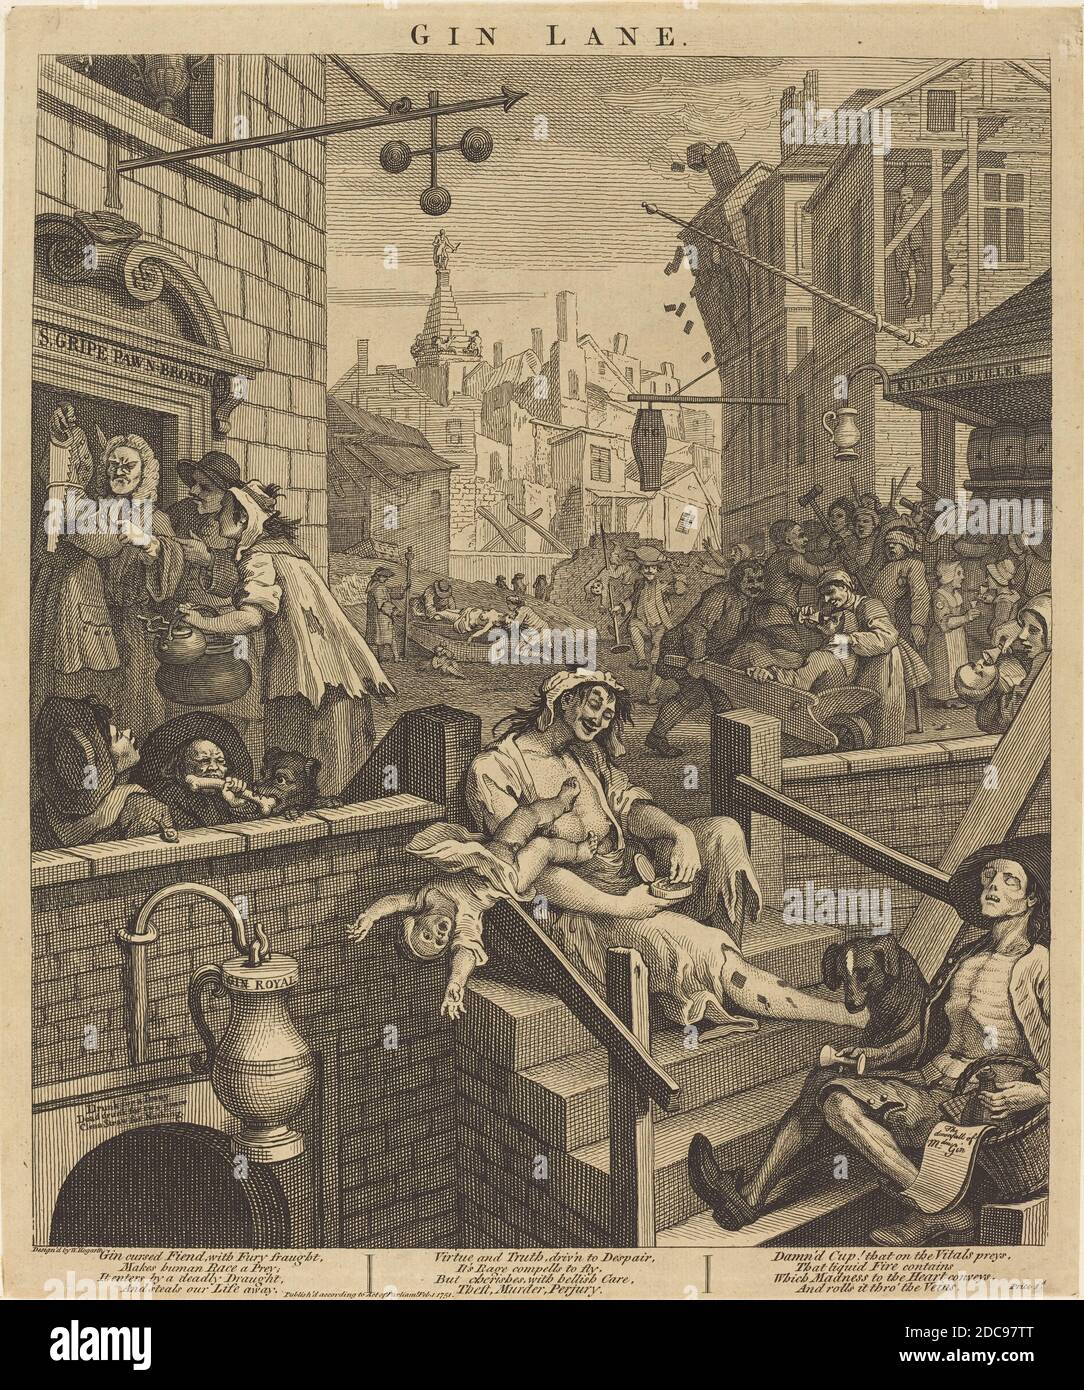 William Hogarth, (artiste), anglais, 1697 - 1764, Gin Lane, Beer Street et Gin Lane, (série), 1751, gravure et gravure Banque D'Images